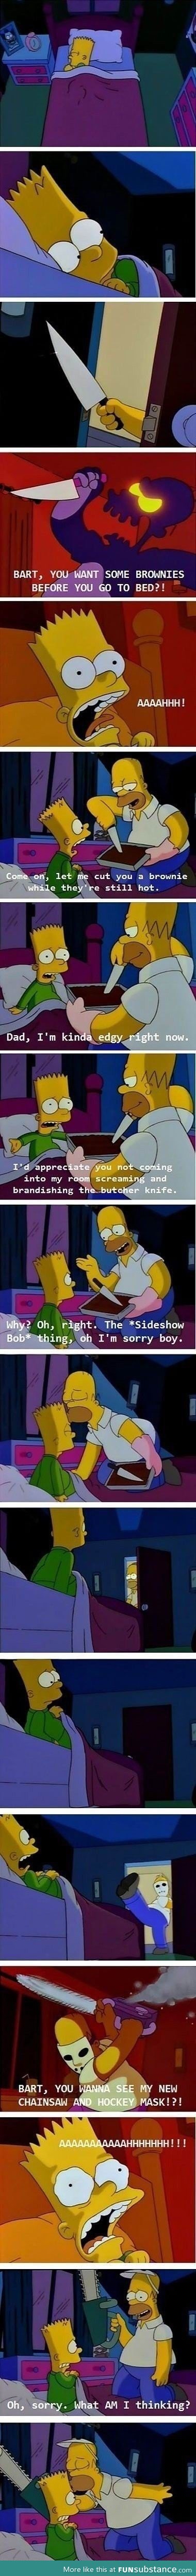 Just Homer